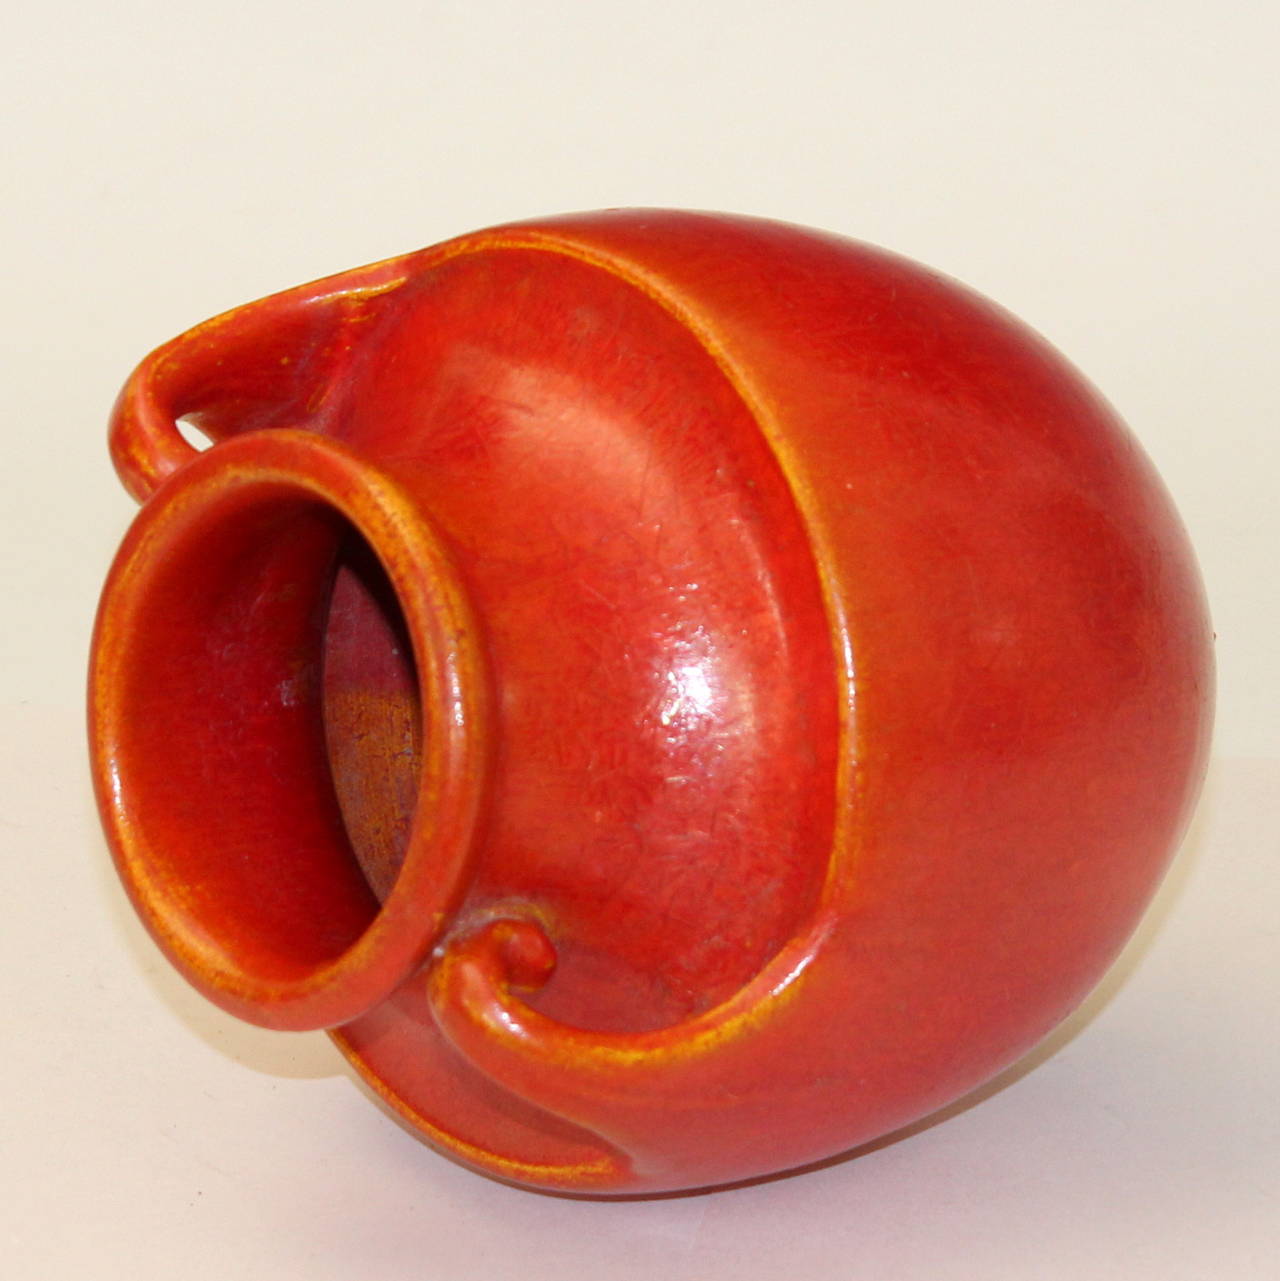 Turned Awaji Pottery Art Deco Vase in Crystalline Chrome Red Glaze